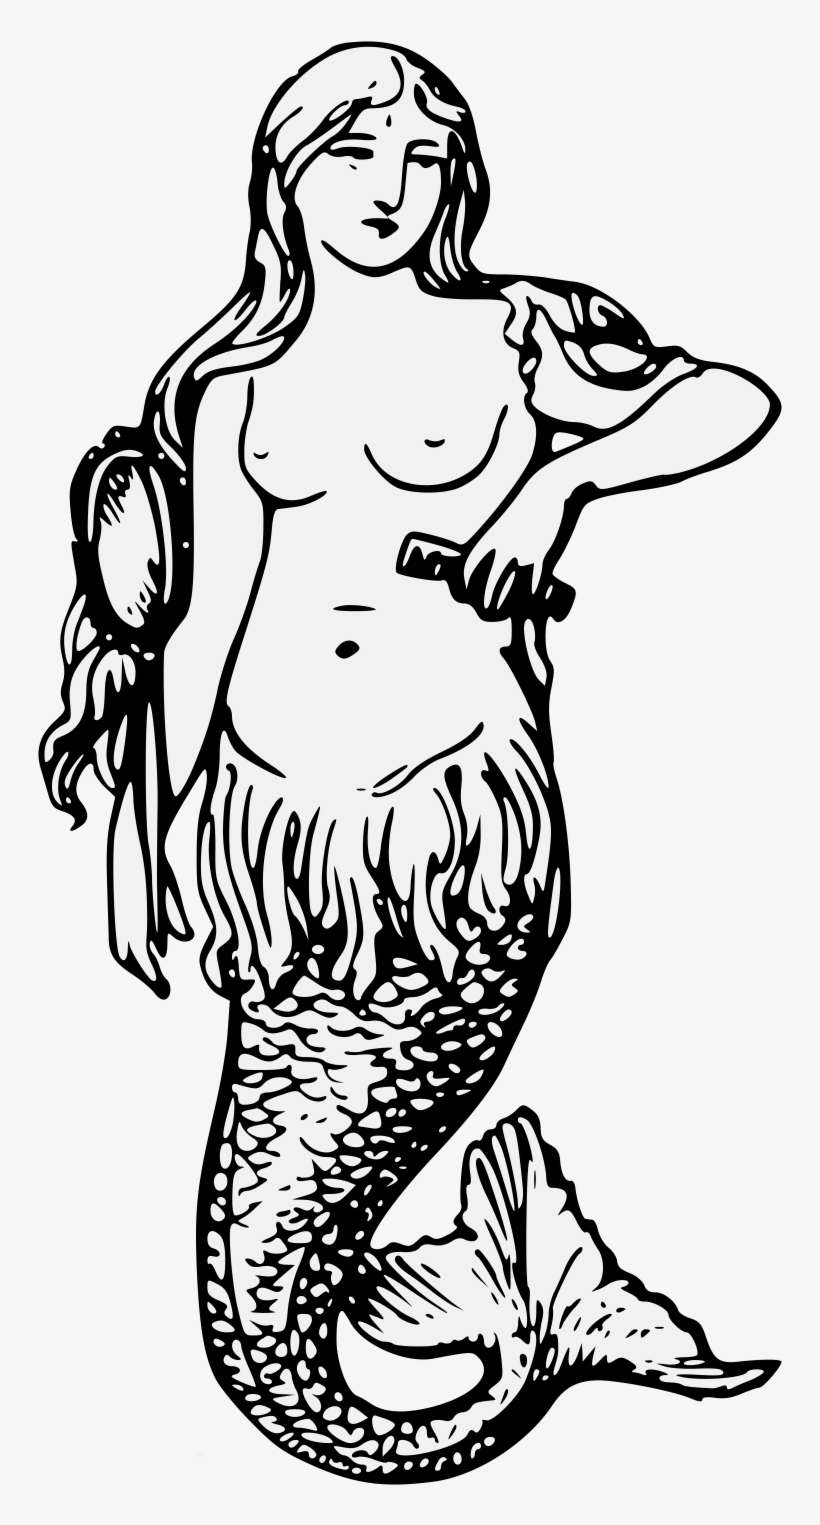 Details, Png - Mermaid Heraldry Sca, transparent png #143204